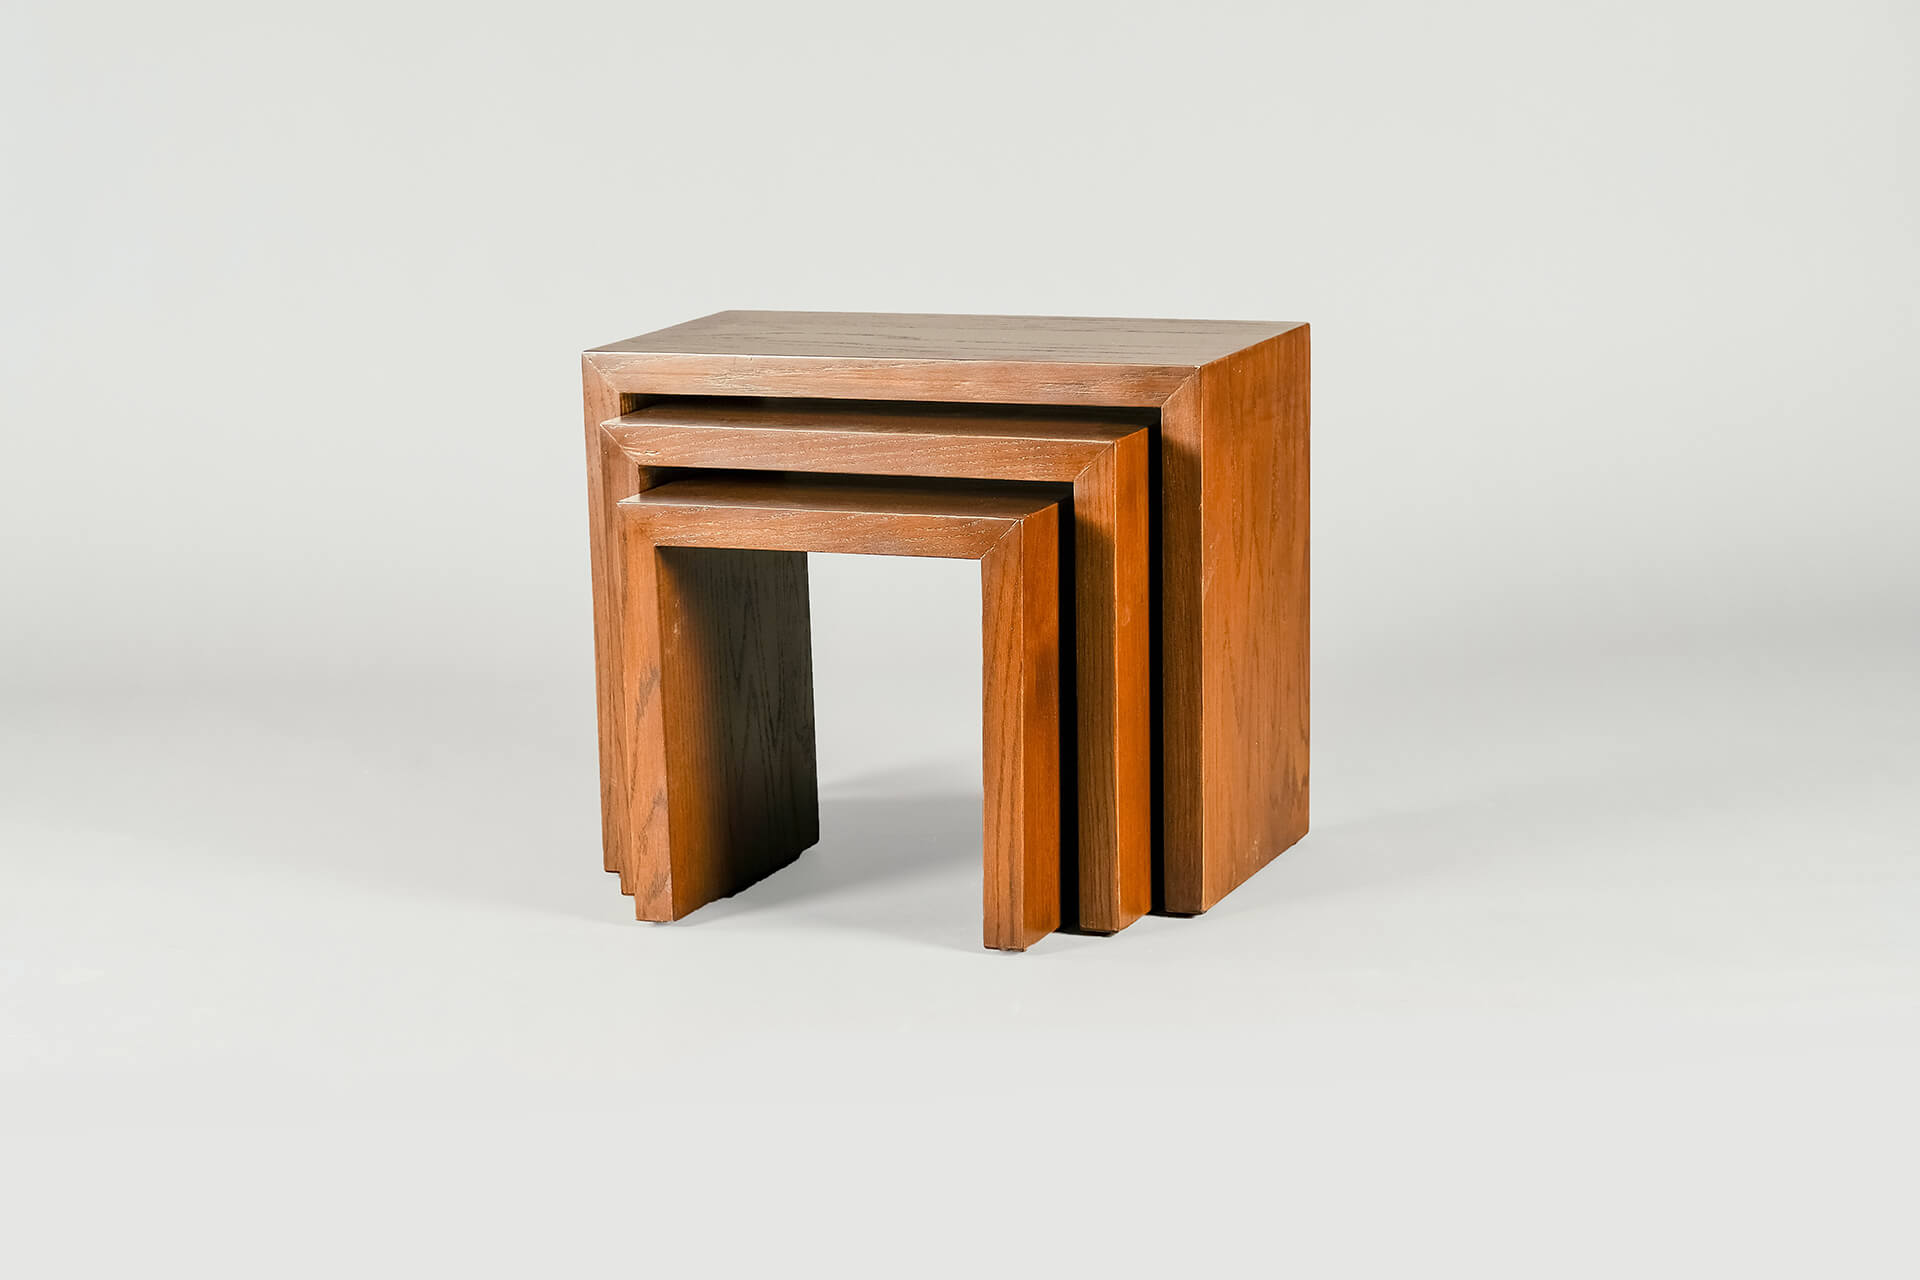 Wooden furnishings portfolio